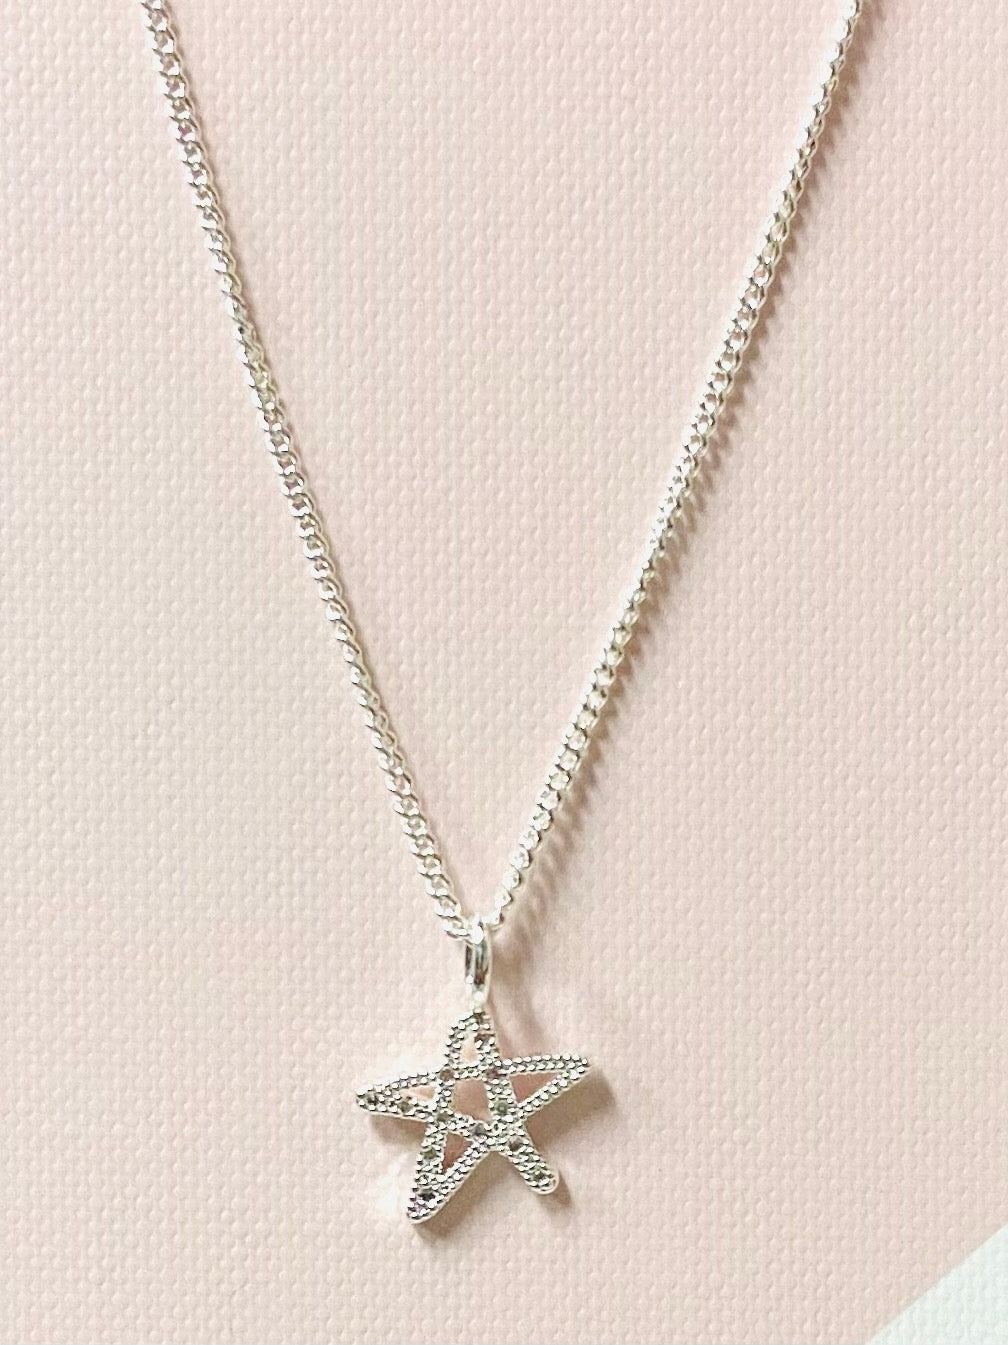 CLEARANCE KLJ2754 Pave Star Necklace